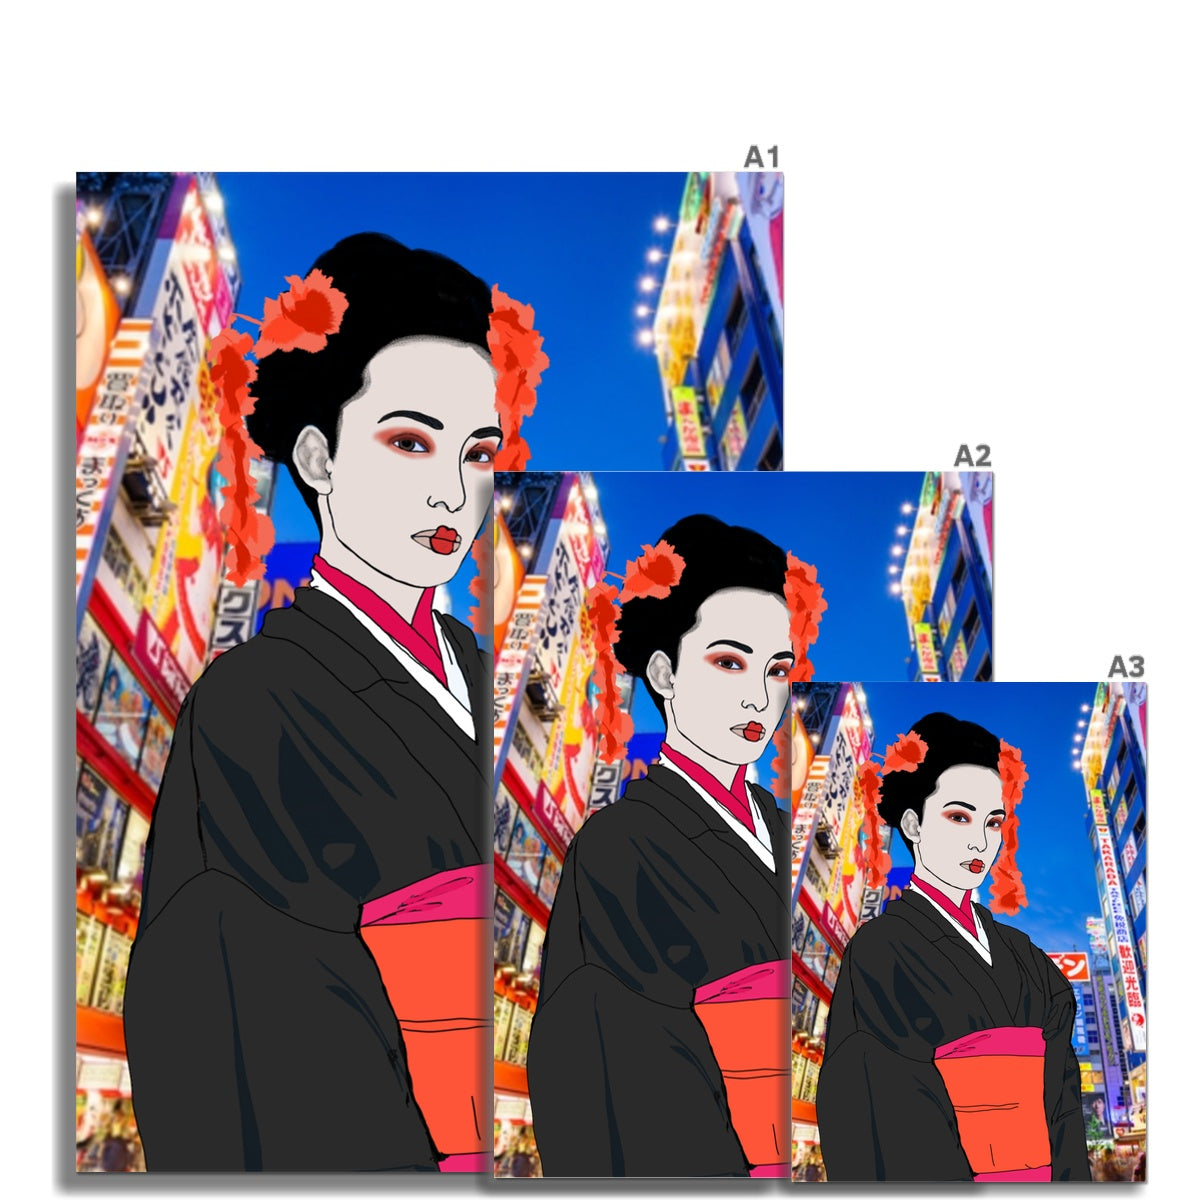 GEISHA IN TOKYO  Hahnemühle Photo Rag Print - valerie-digital-art